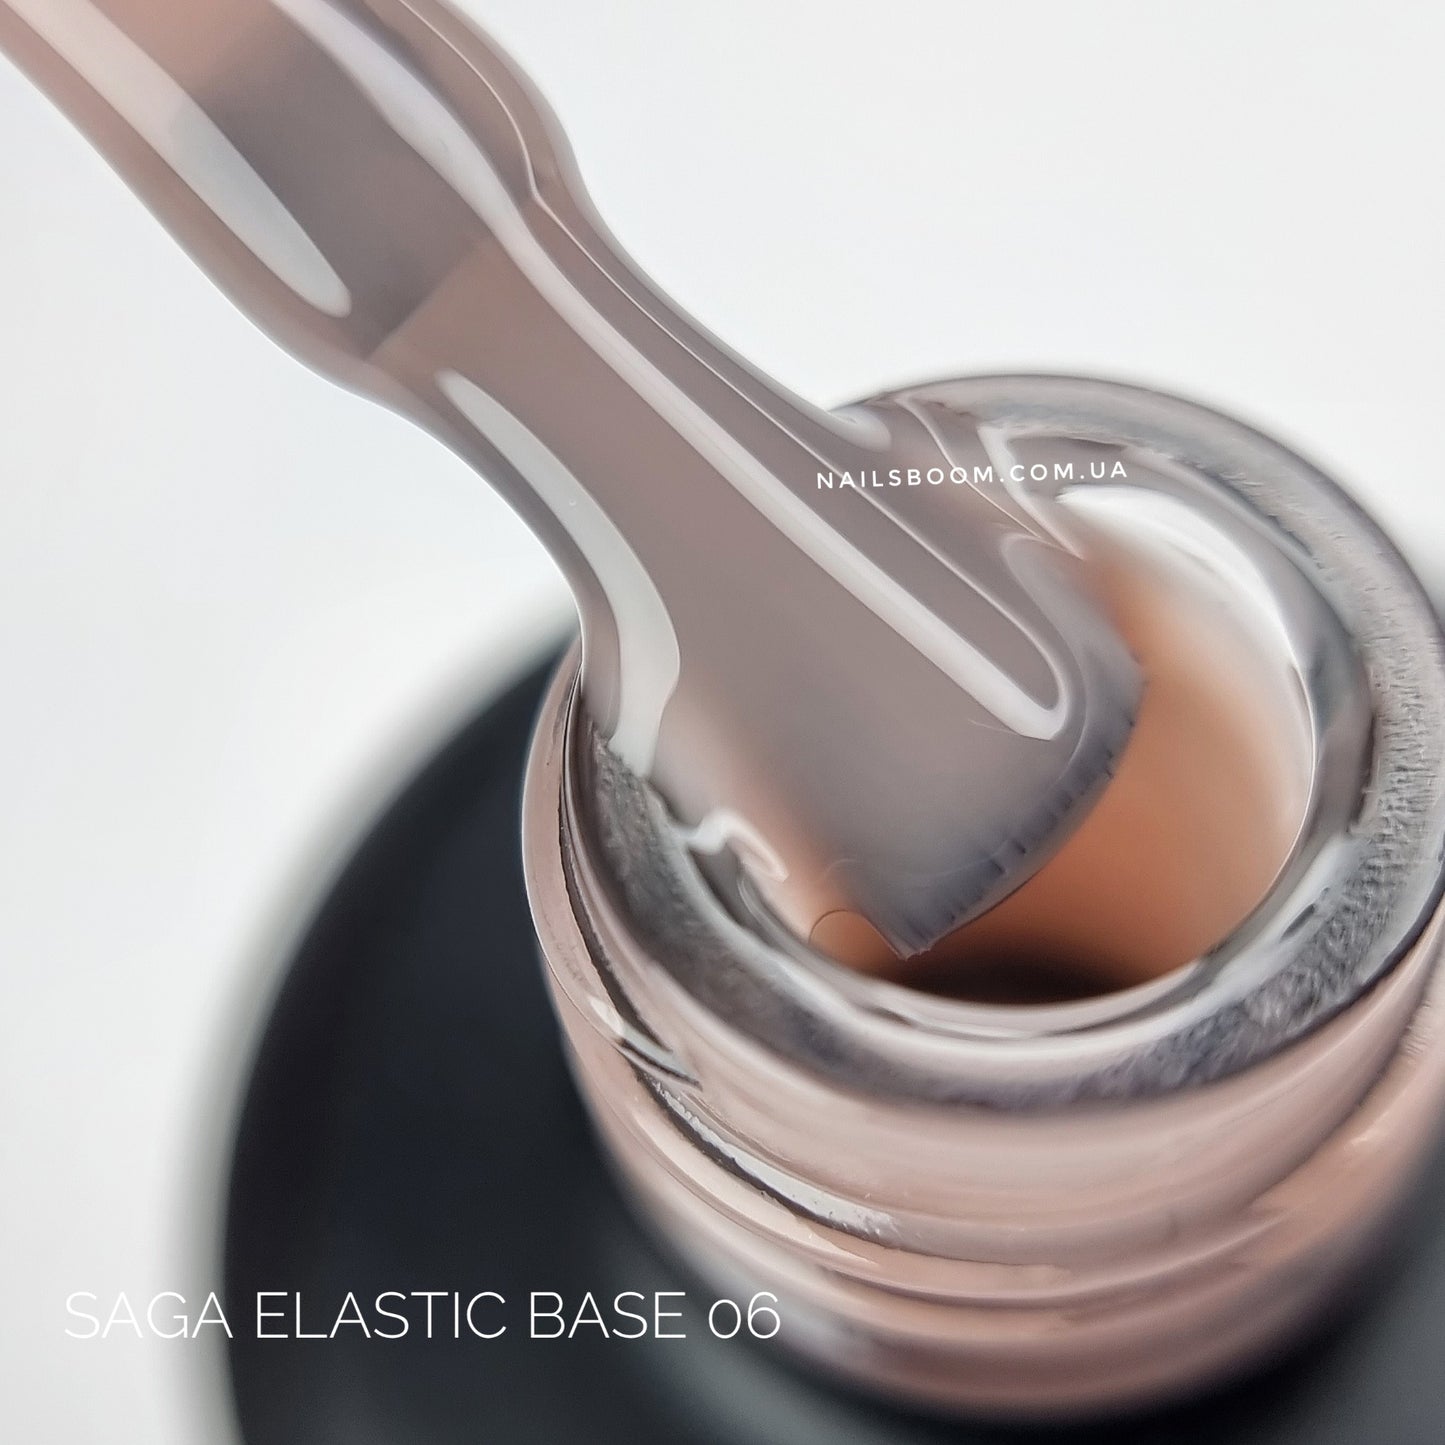 Saga Cover Base Elastic №6(Milk cold) (bottle with brush), 15 ml